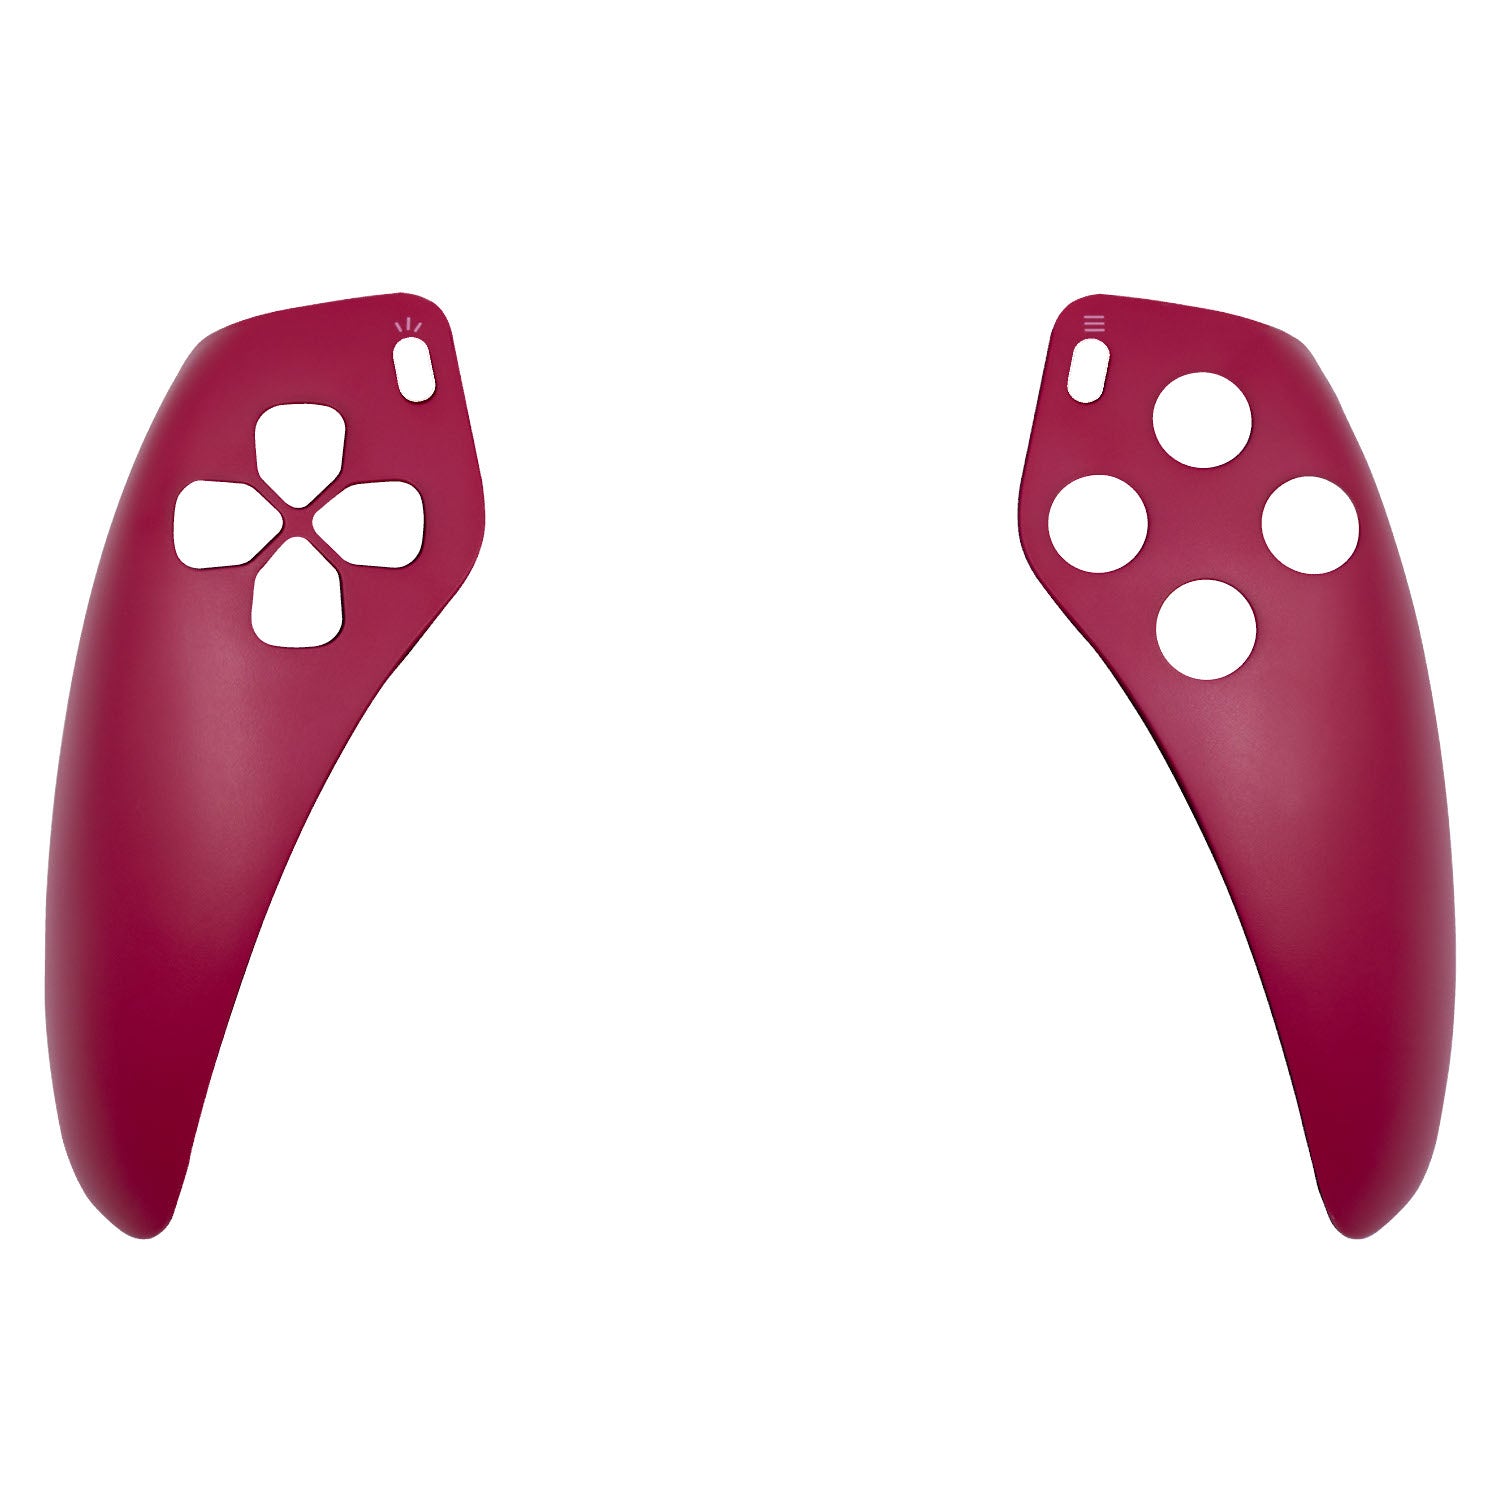 PS5 OEM Faceplates - Battle Beaver Customs - OEM Cosmic Red